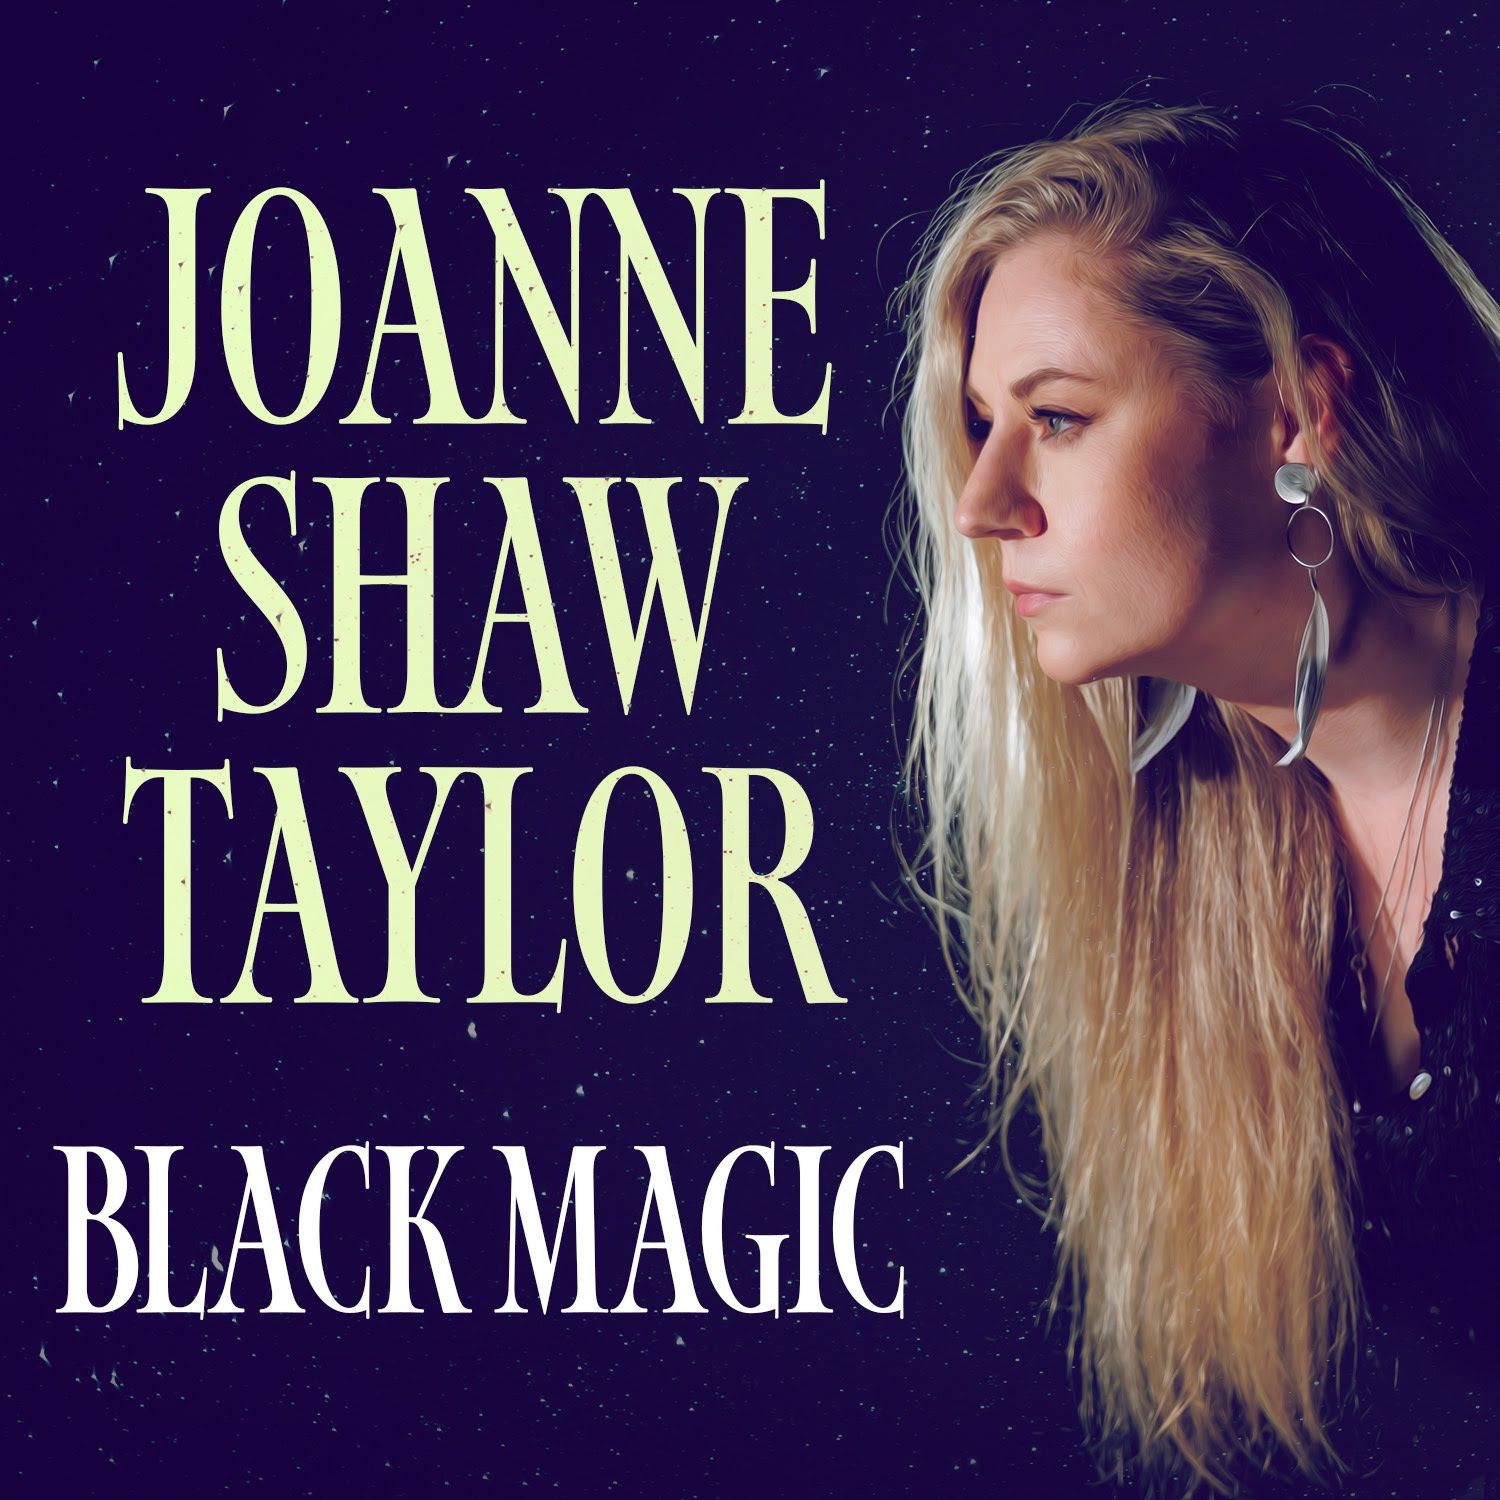 Joanne Shaw Taylor Returns with Enchanting New Single "Black Magic"